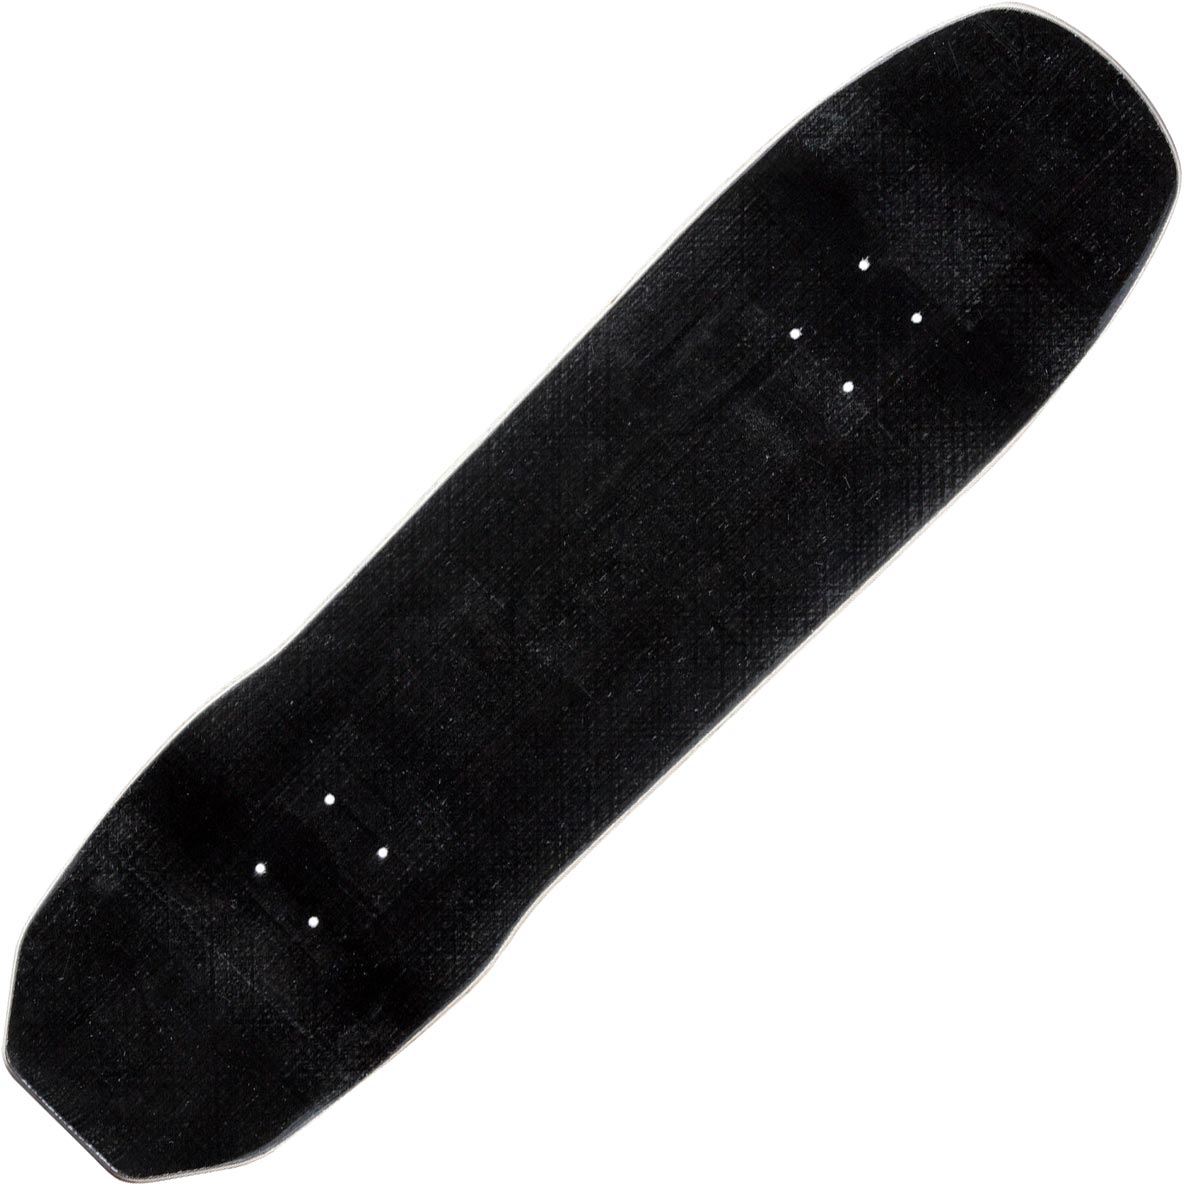 Powell-Peralta Flight Anderson Shape 289 Deck (8.45") - Tiki Room Skateboards - 2